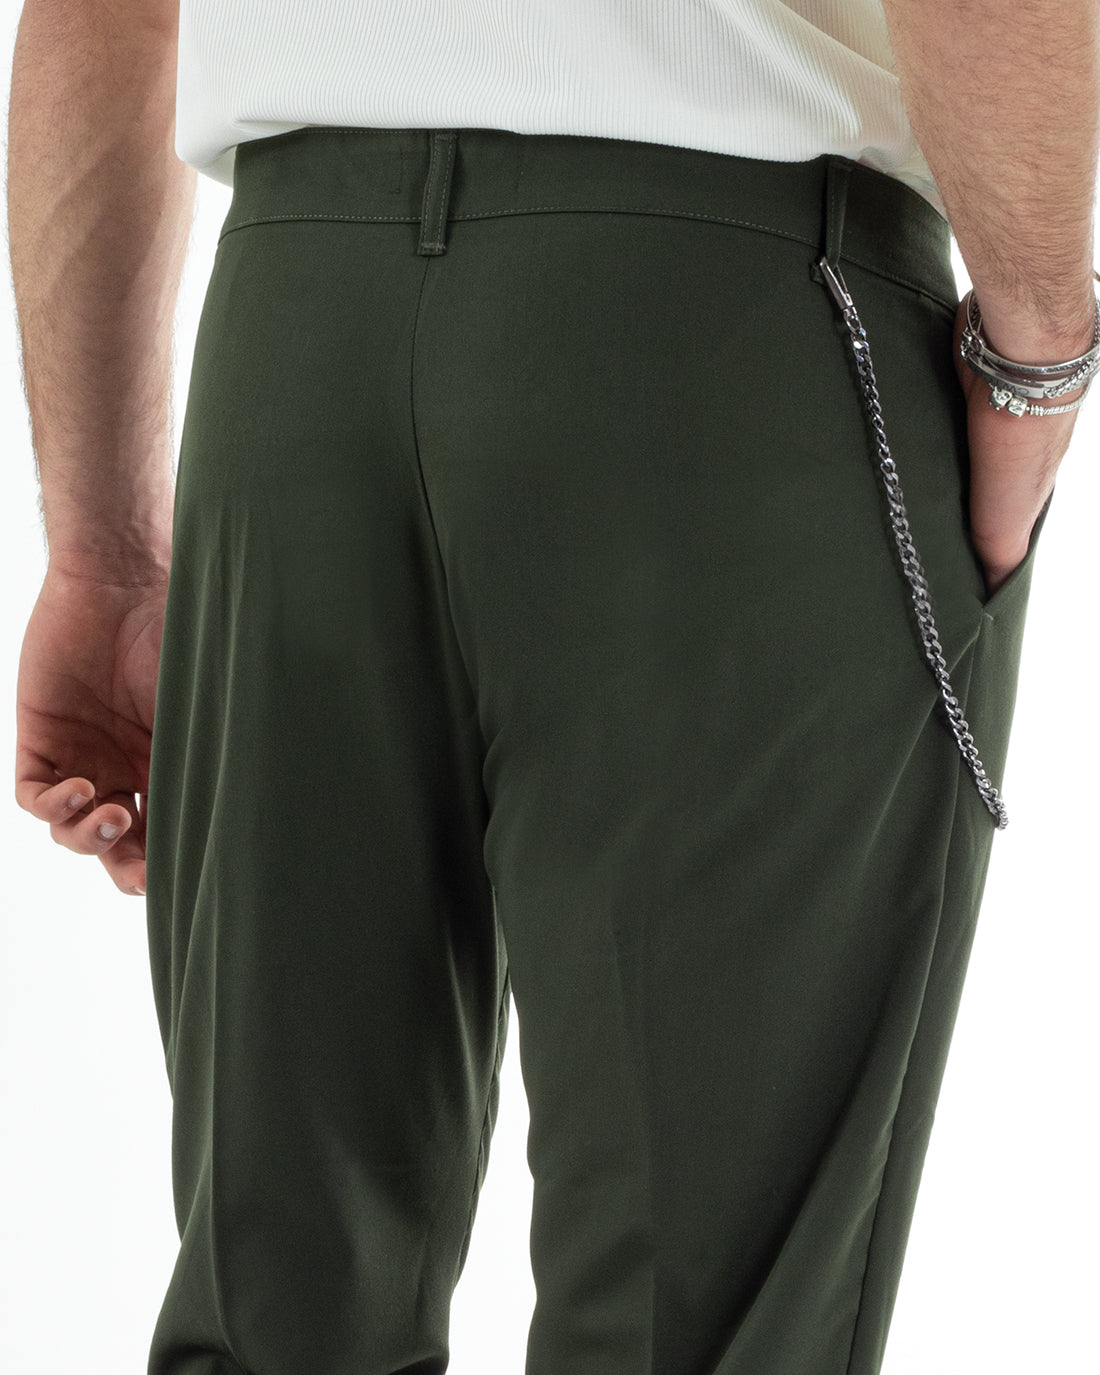 Pantaloni Uomo Tasca America Viscosa Verde Capri Casual Classico Pinces GIOSAL-P5949A